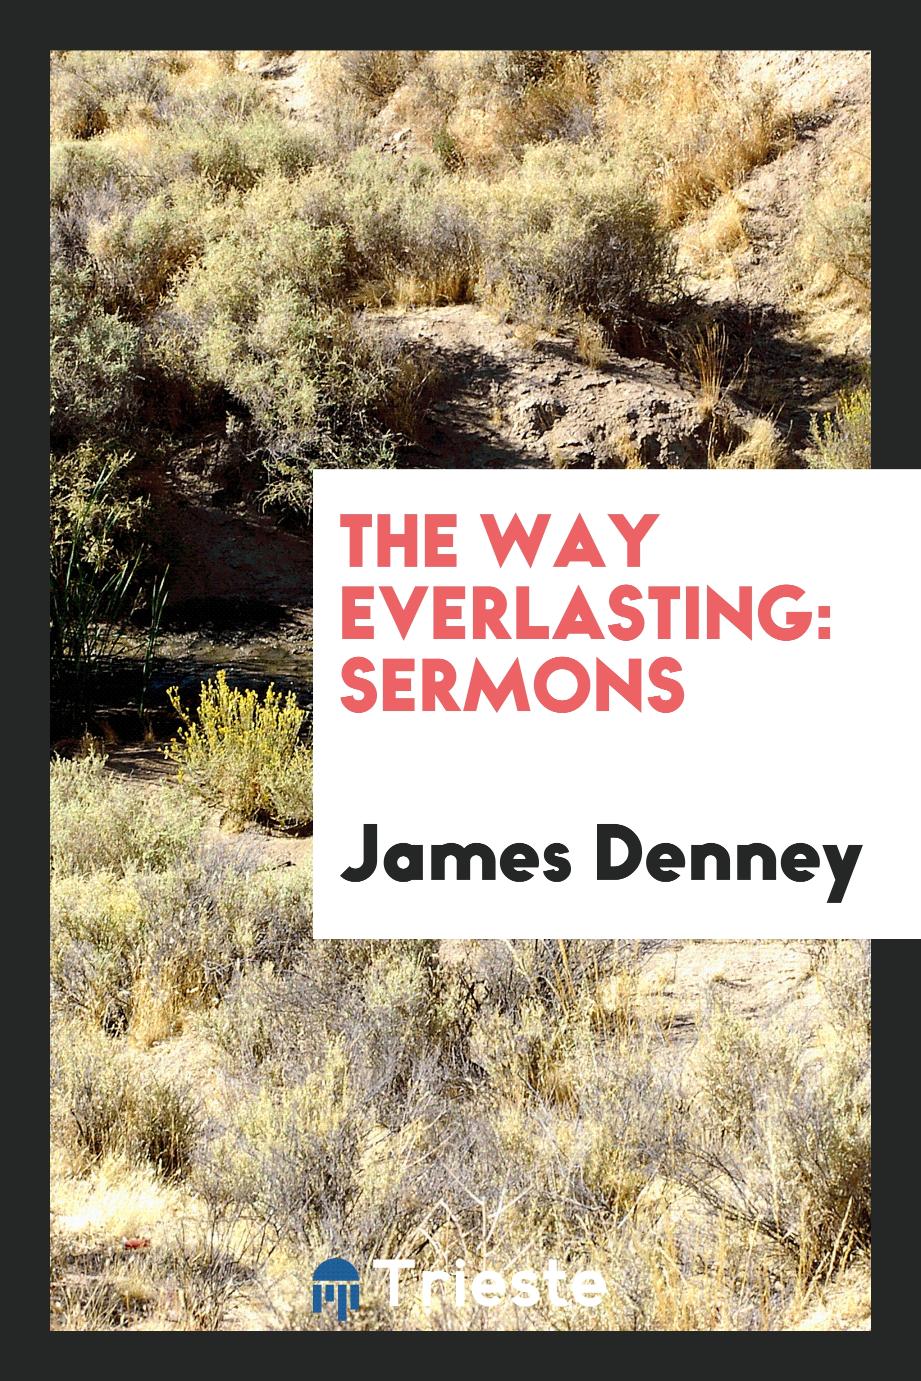 The Way Everlasting: Sermons